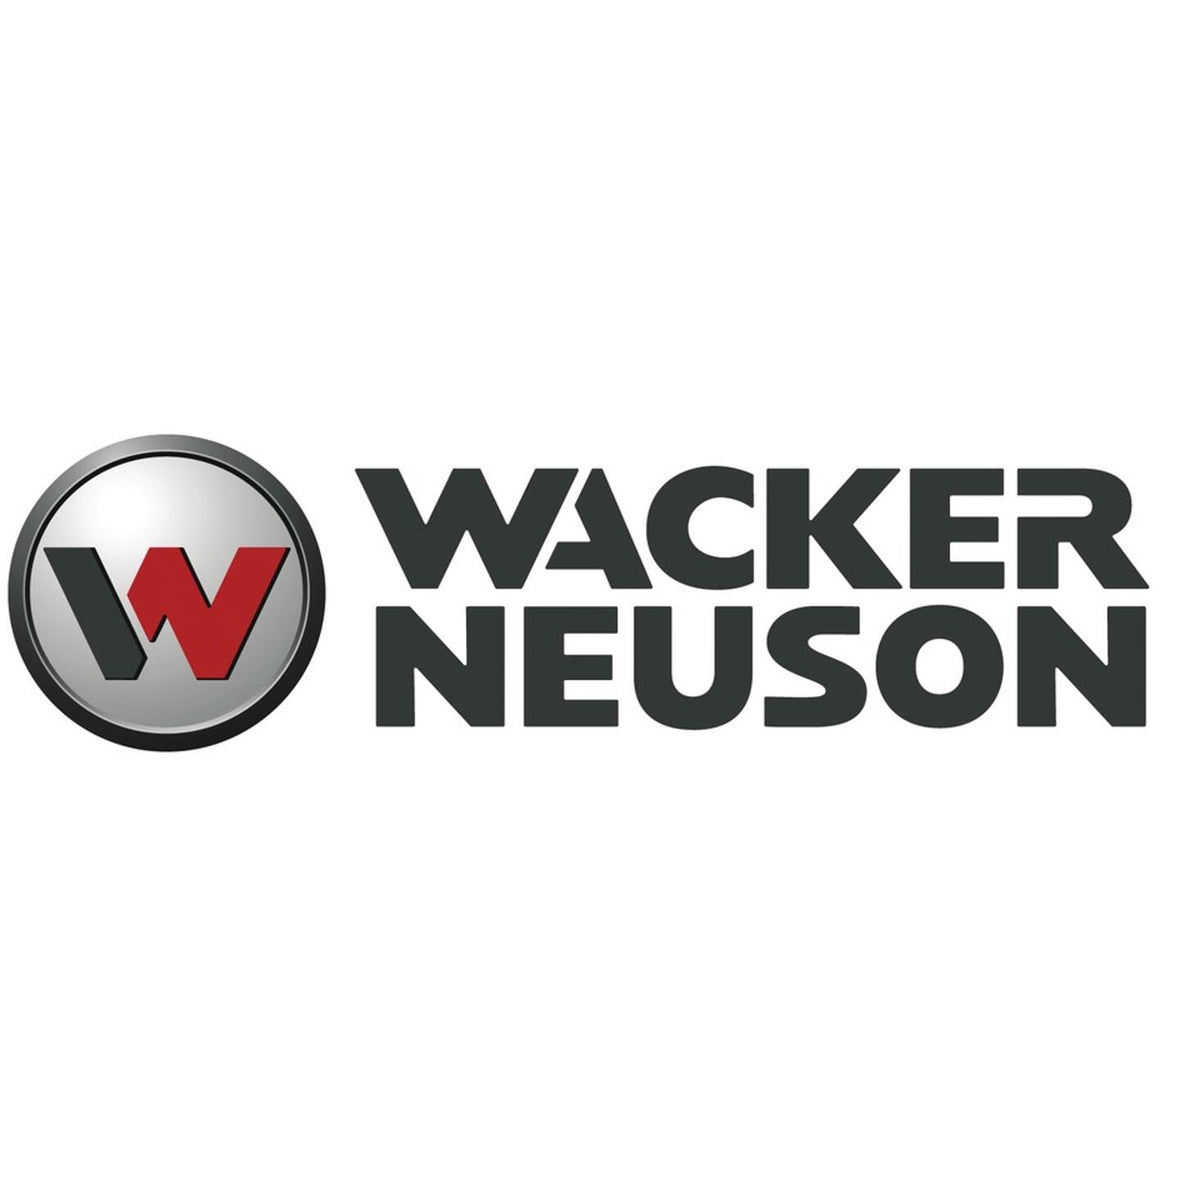 Wacker Neuson Rio Rubber Track